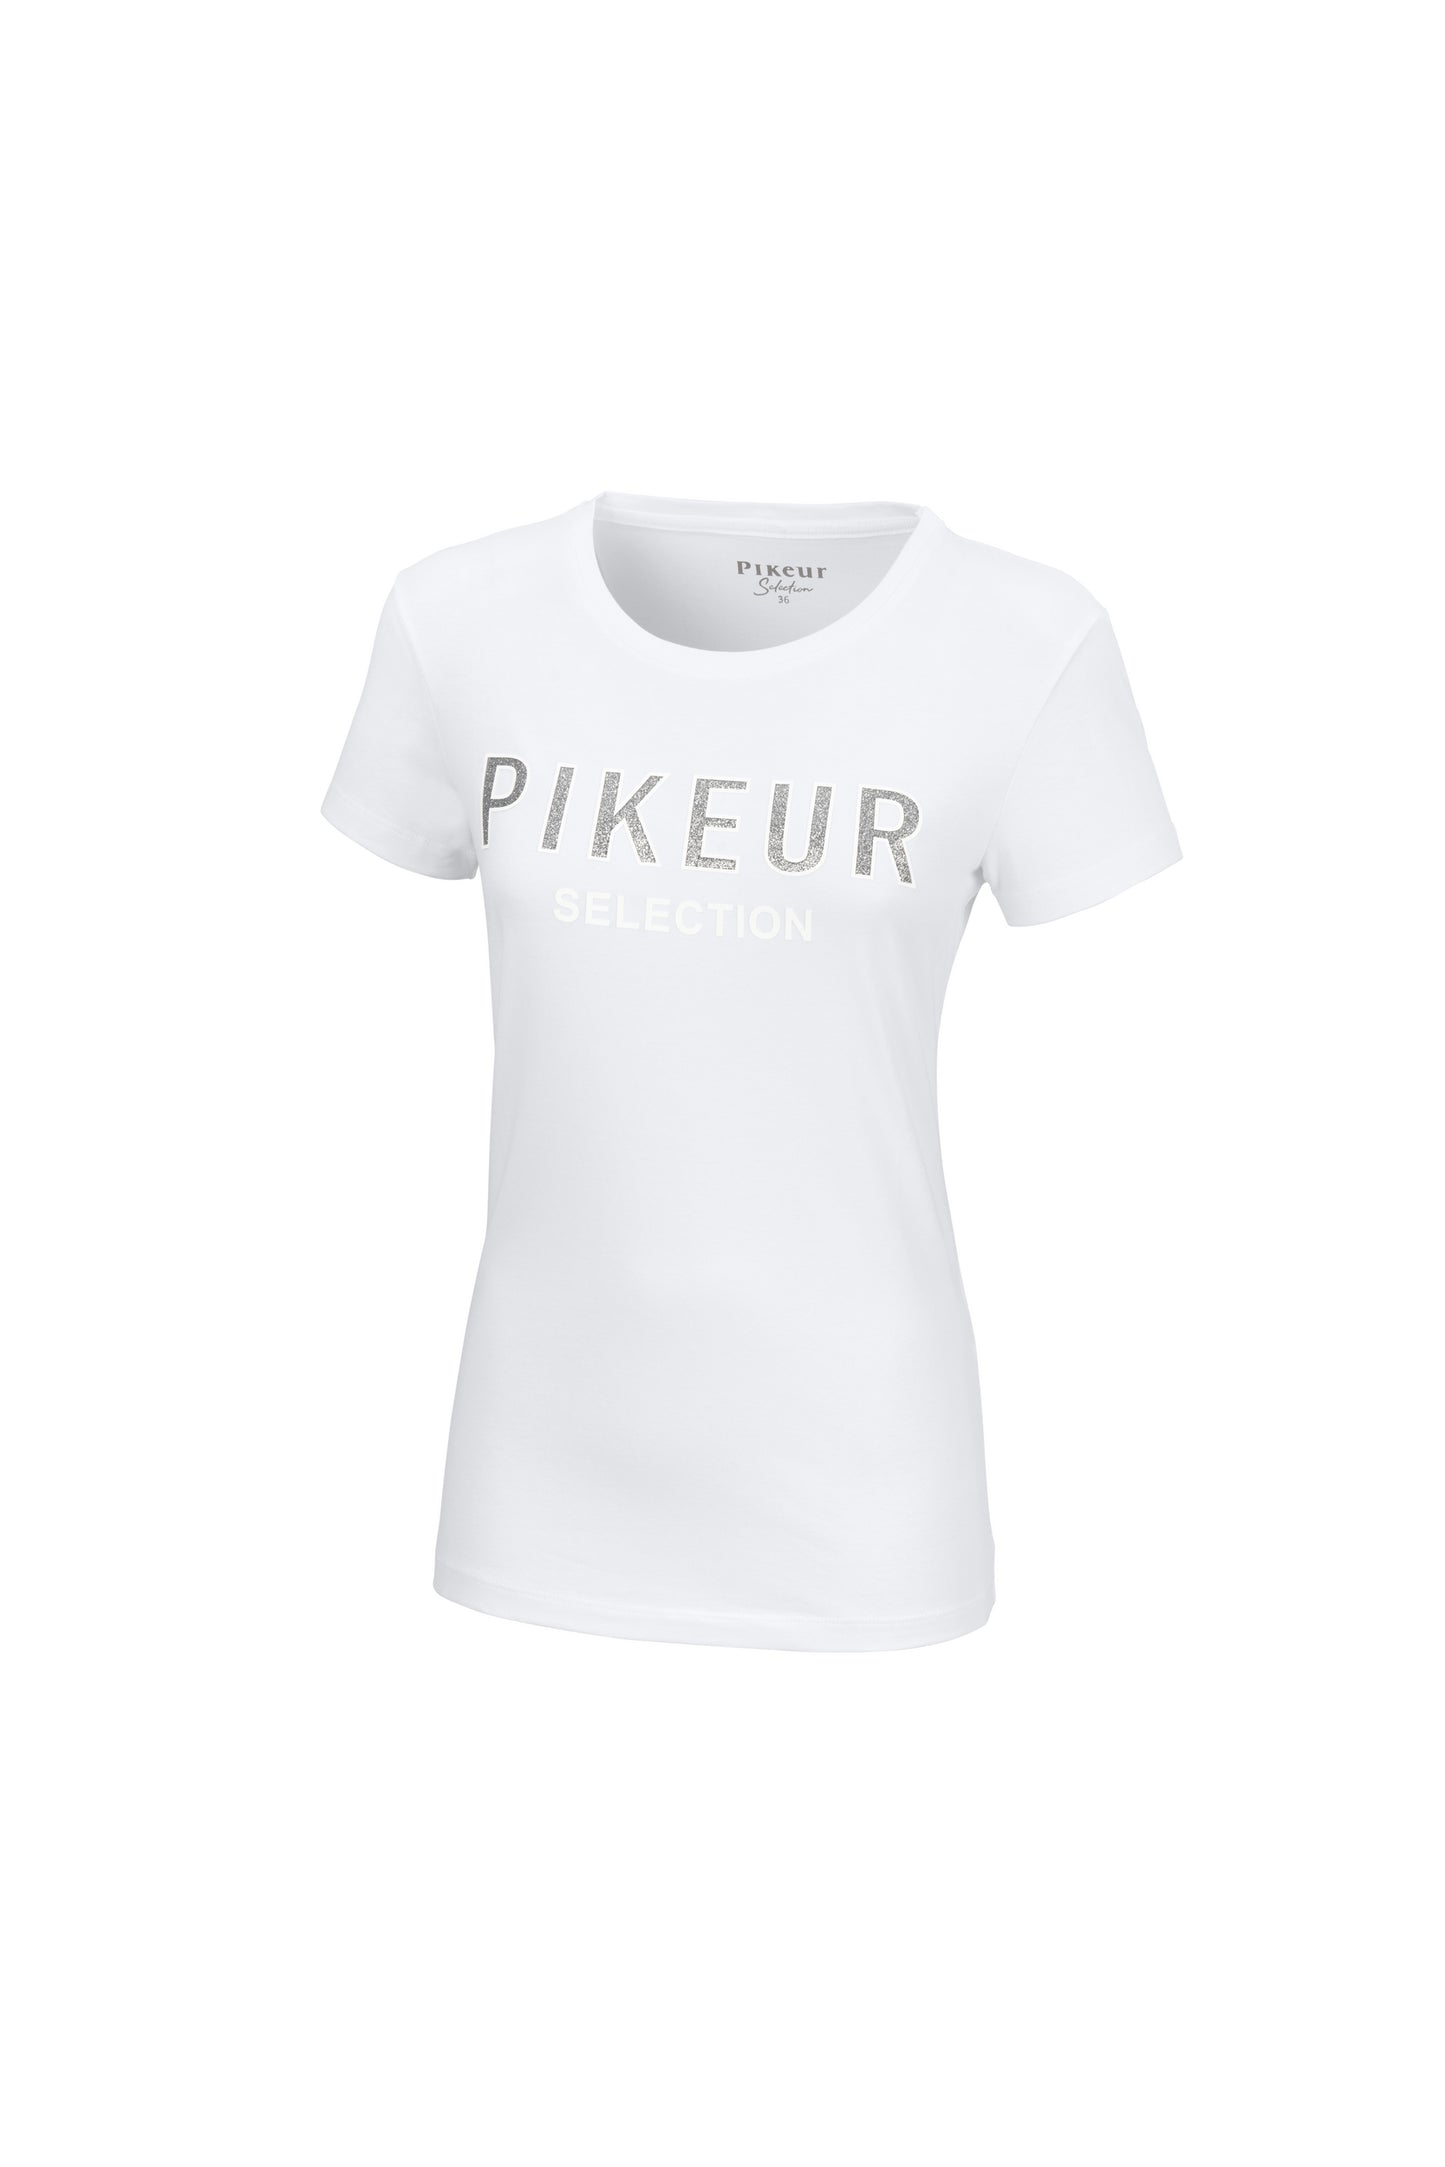 Pikeur Vida T Shirt - White